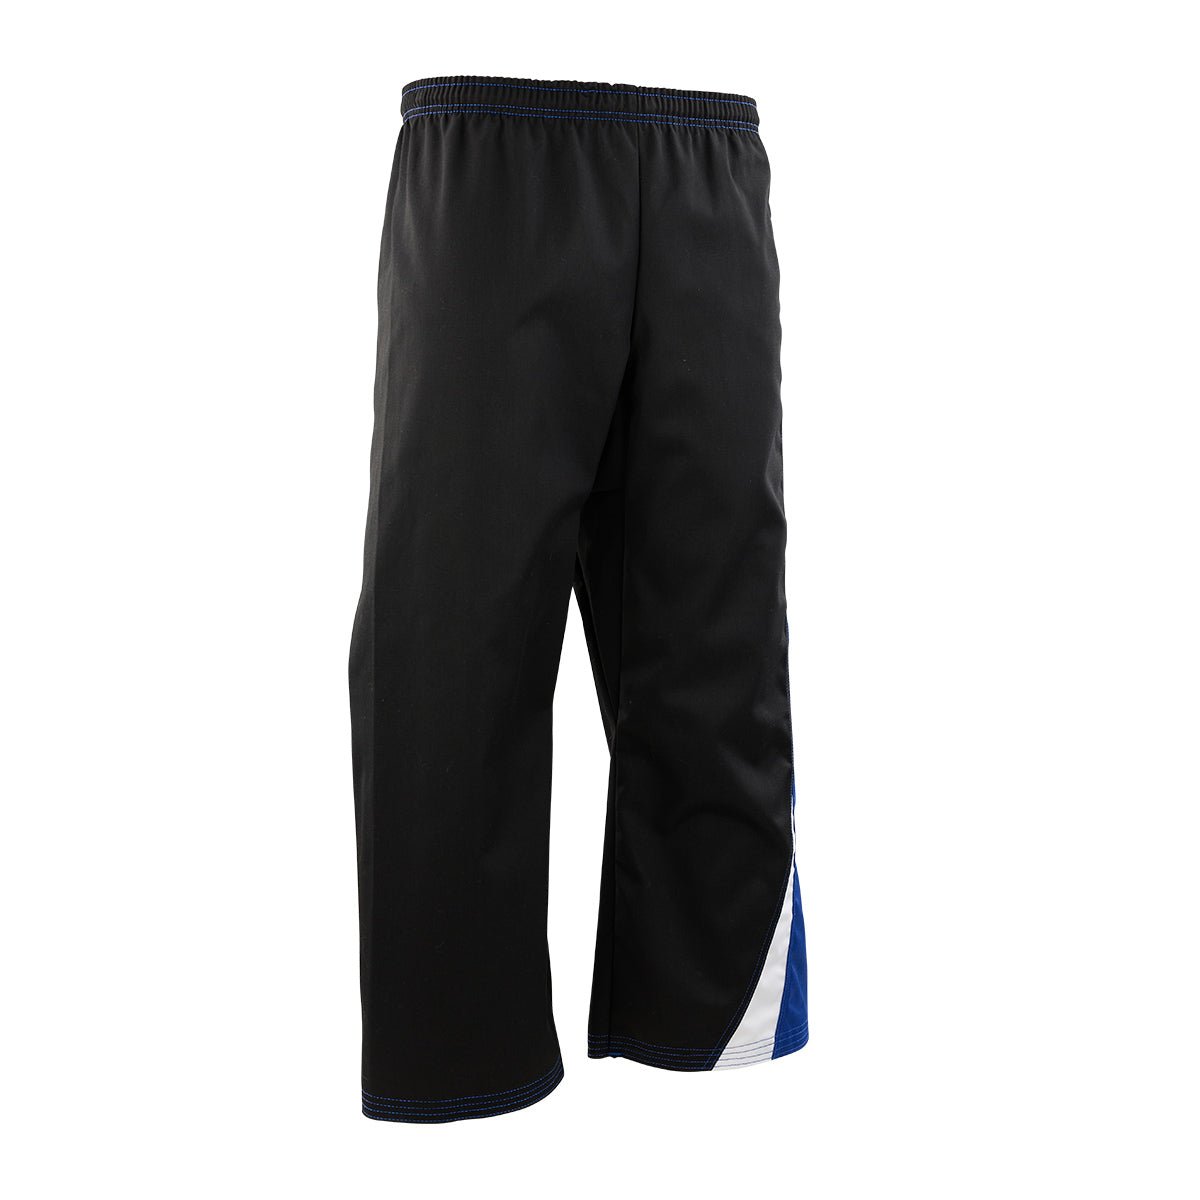 Splice Program Uniform Pants Black/Blue